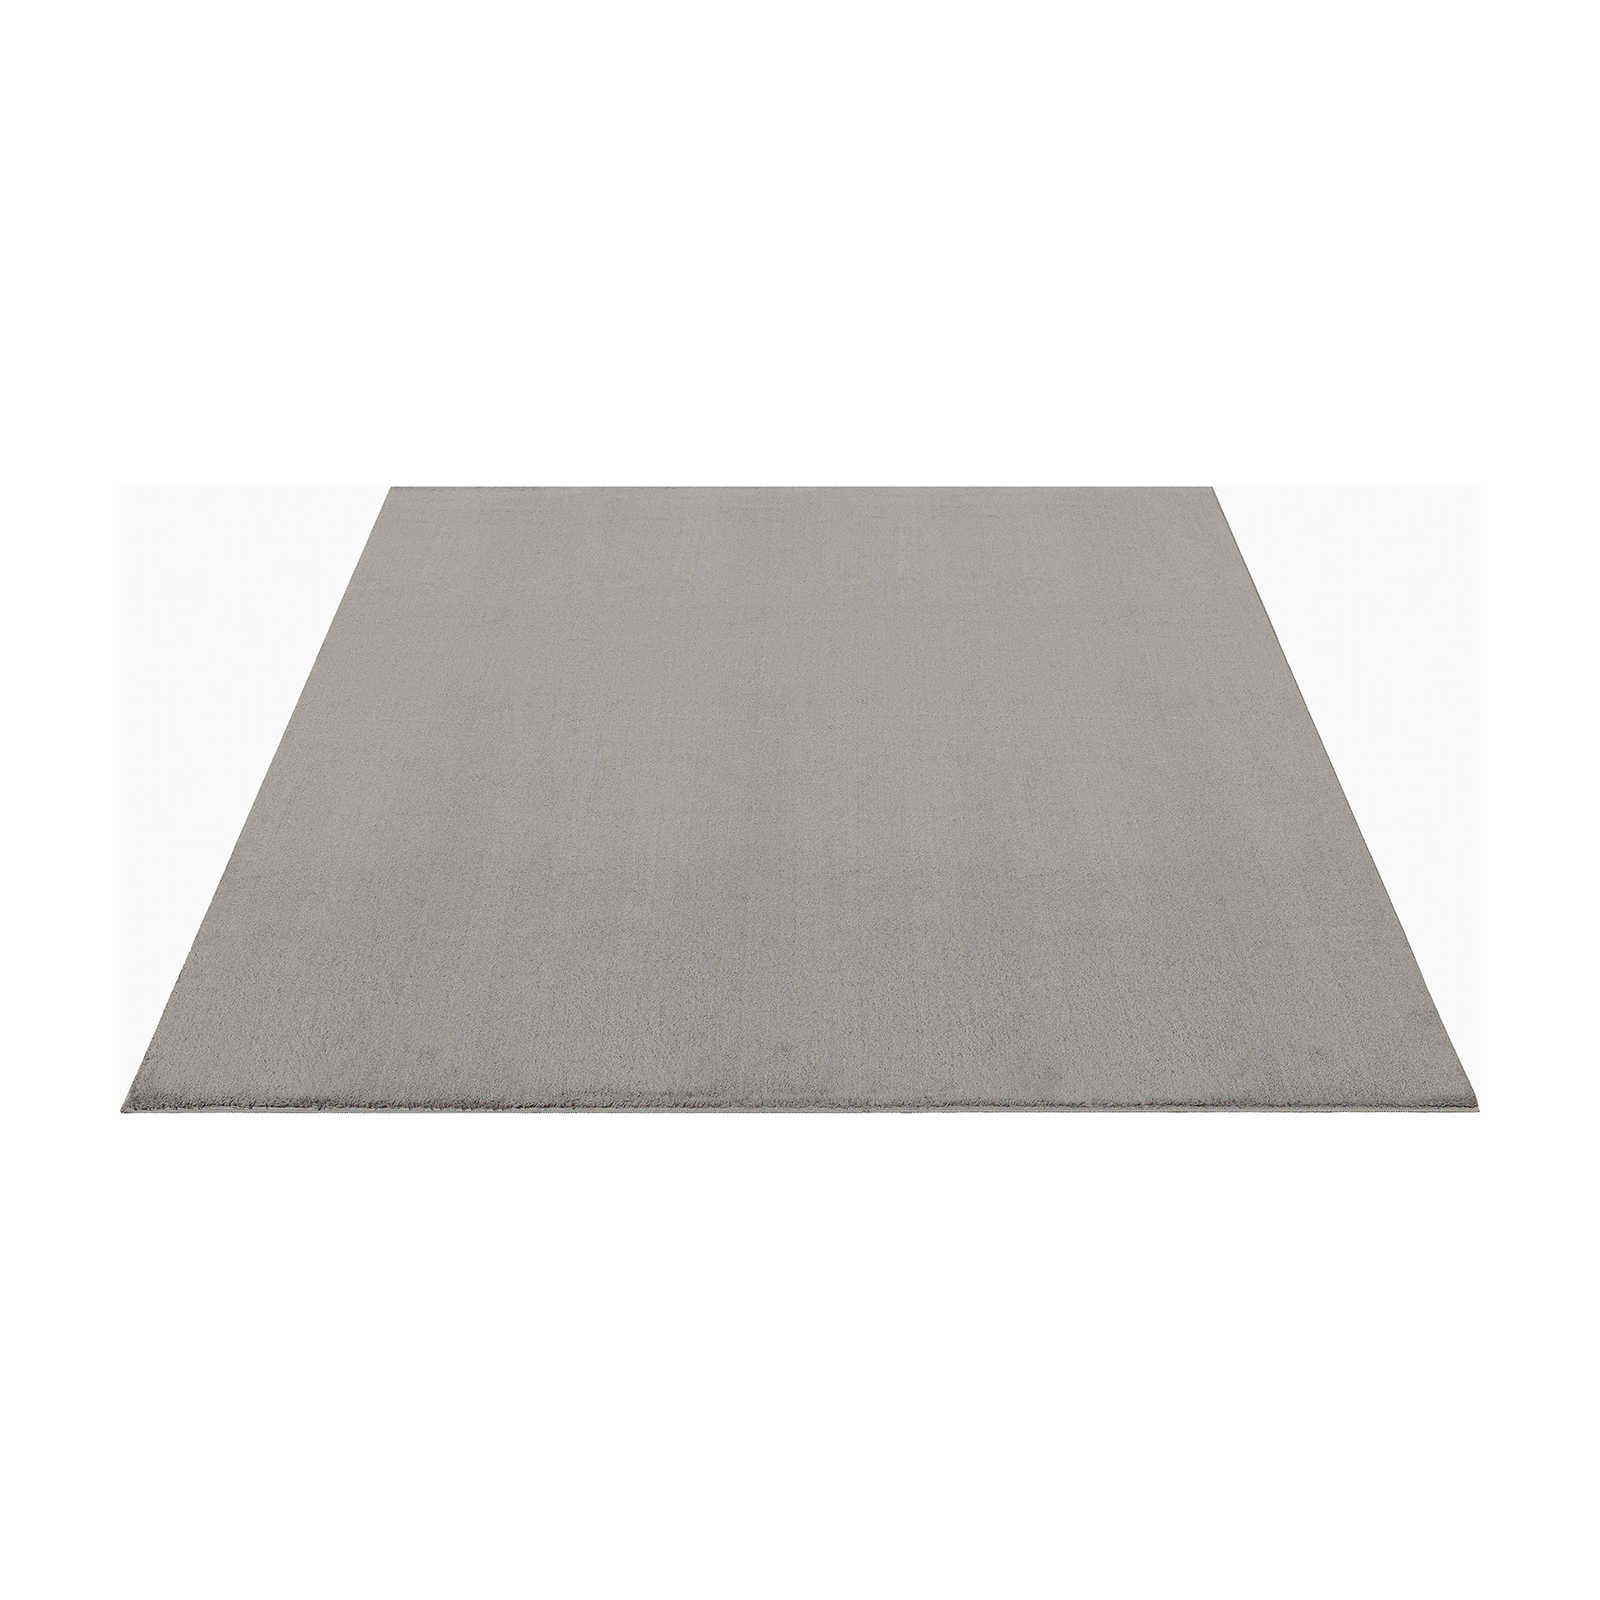 Fashionable high pile carpet in sand - 290 x 200 cm
